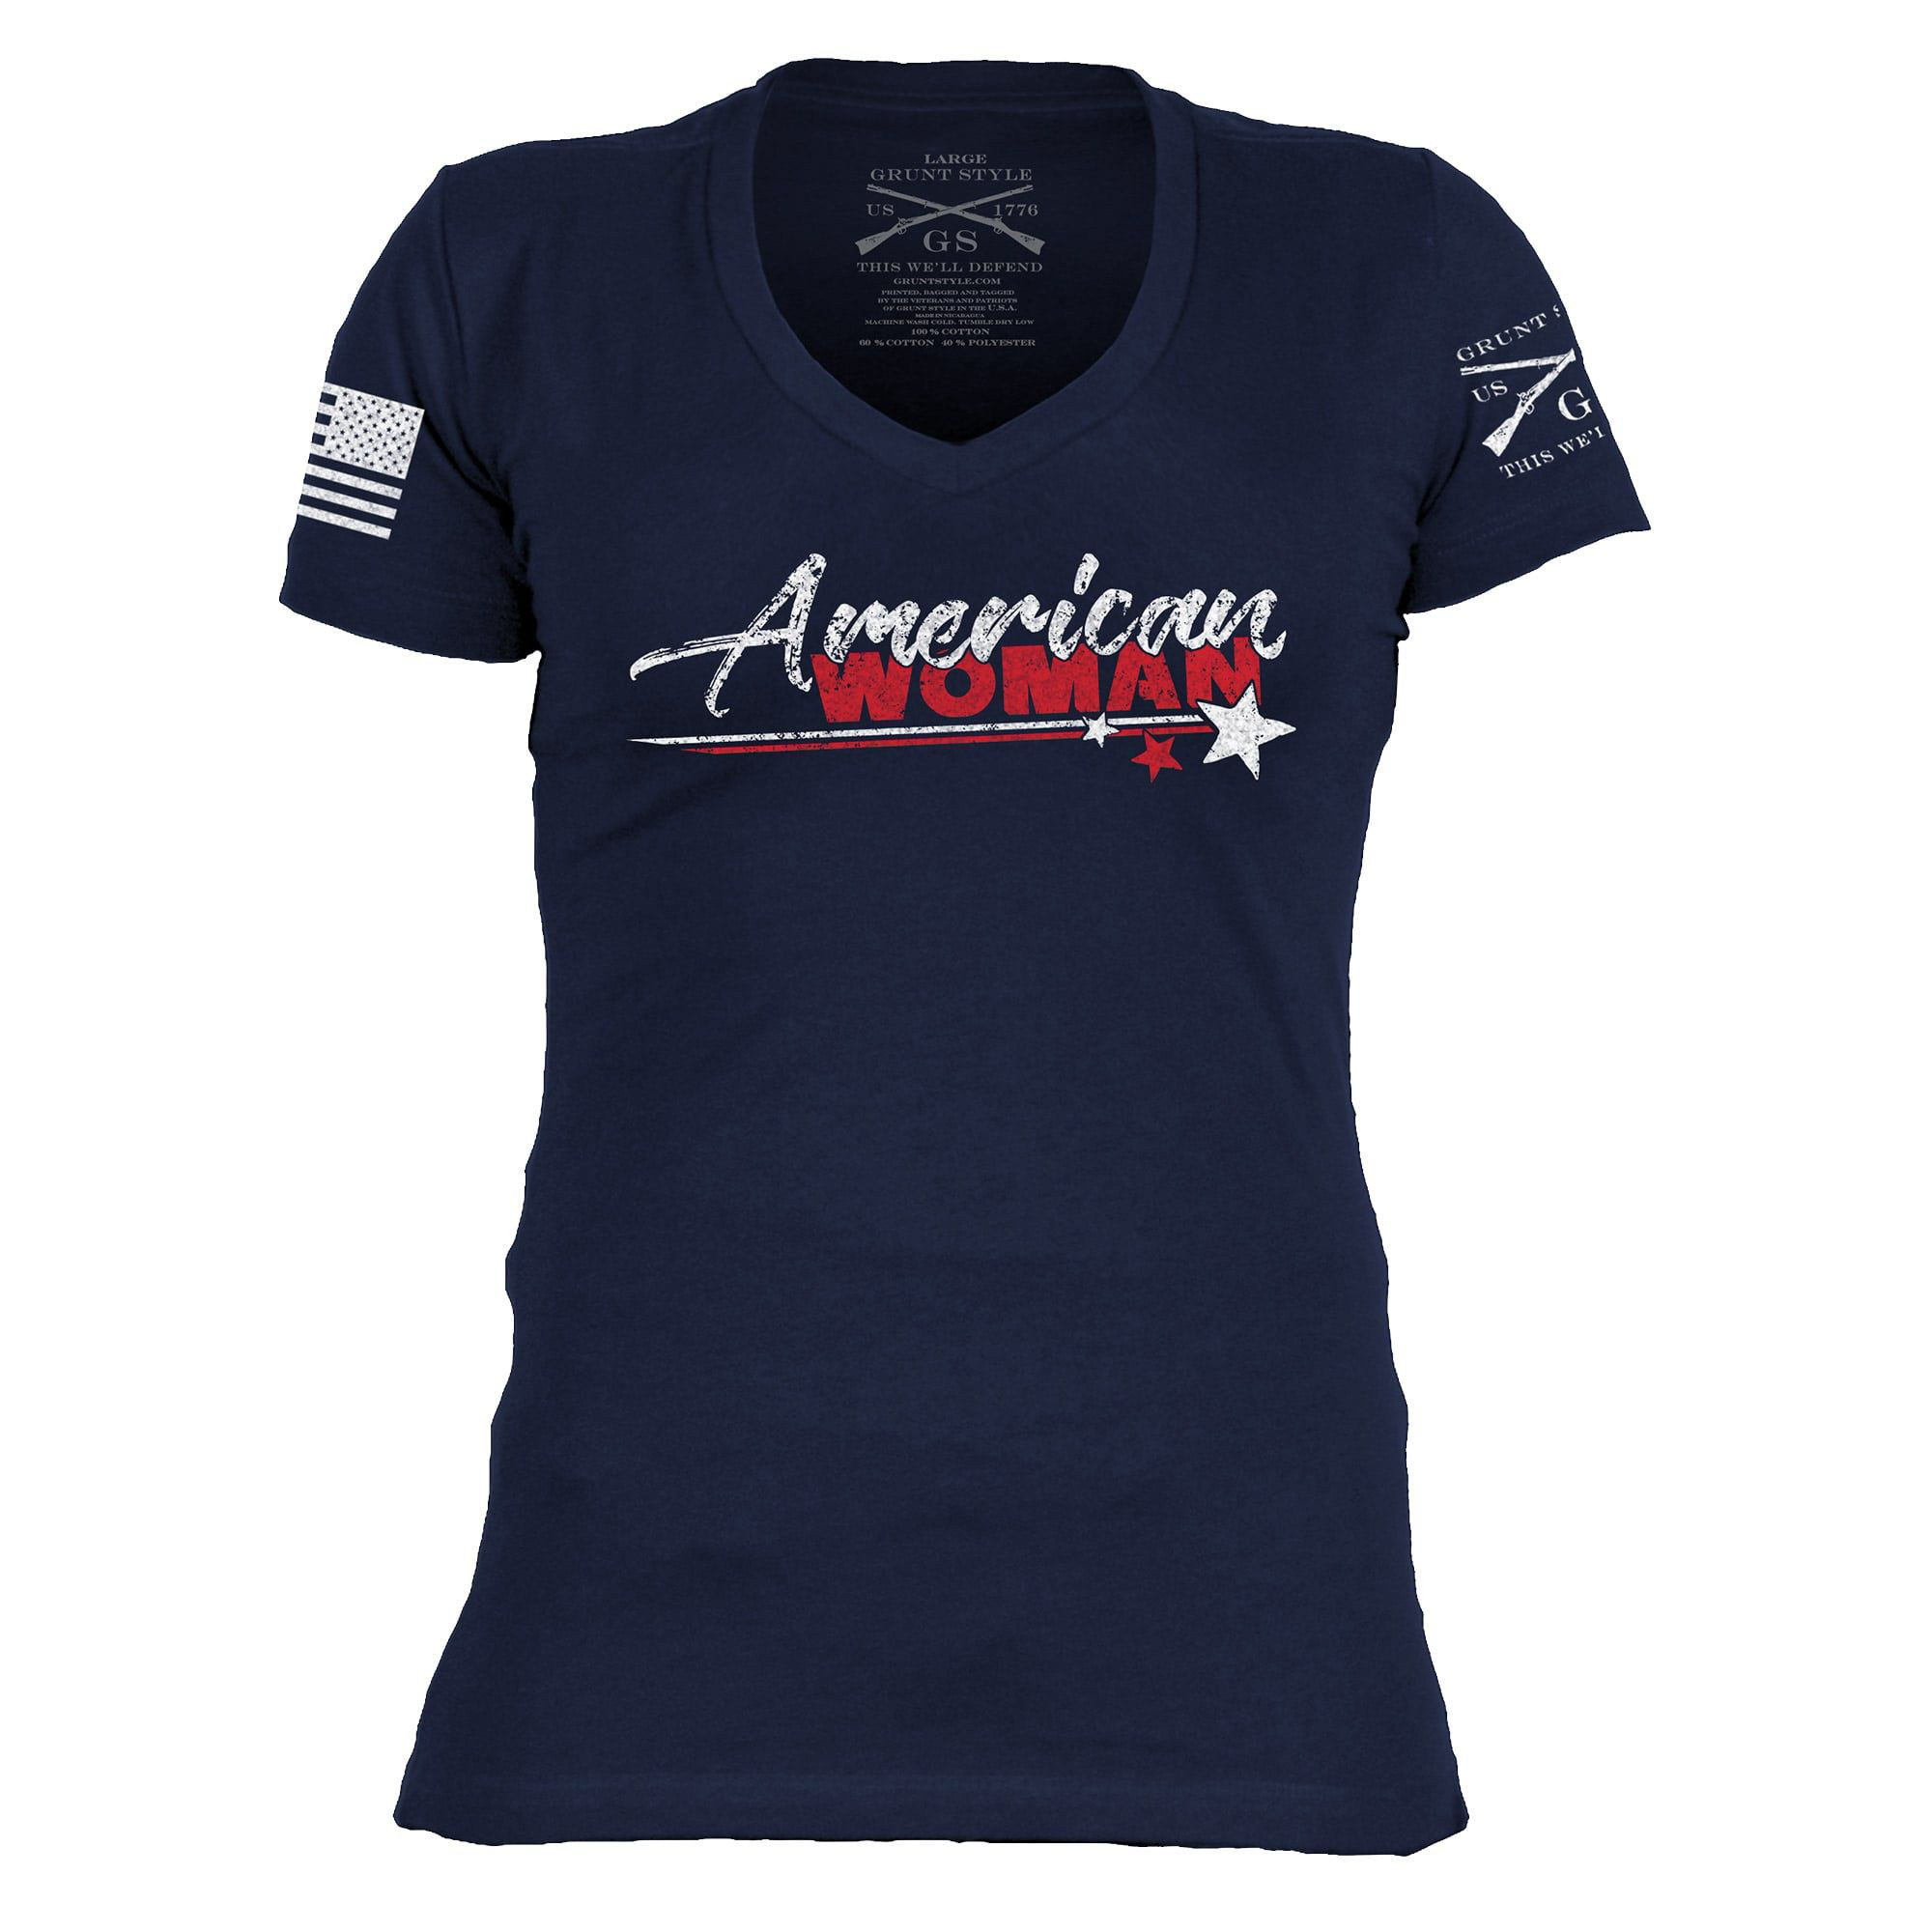 Grunt Style American Woman Short-Sleeve Tee for Ladies - Midnight Navy - 2XL